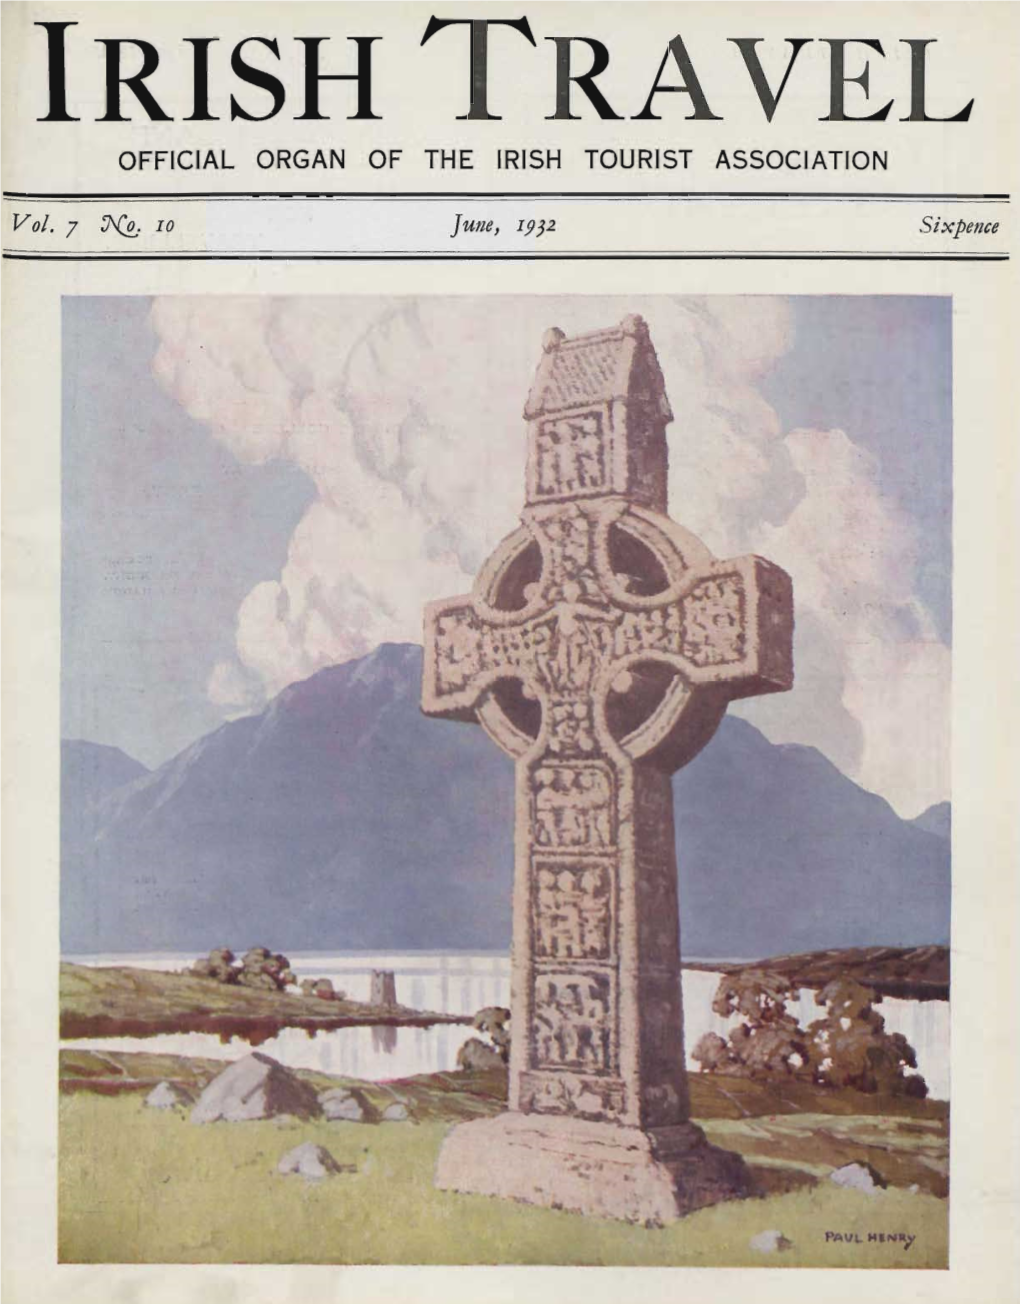 IRISH RAVEL OFFICIAL ORGAN of the IRISH TOURIST ASSOCIATION - Vol